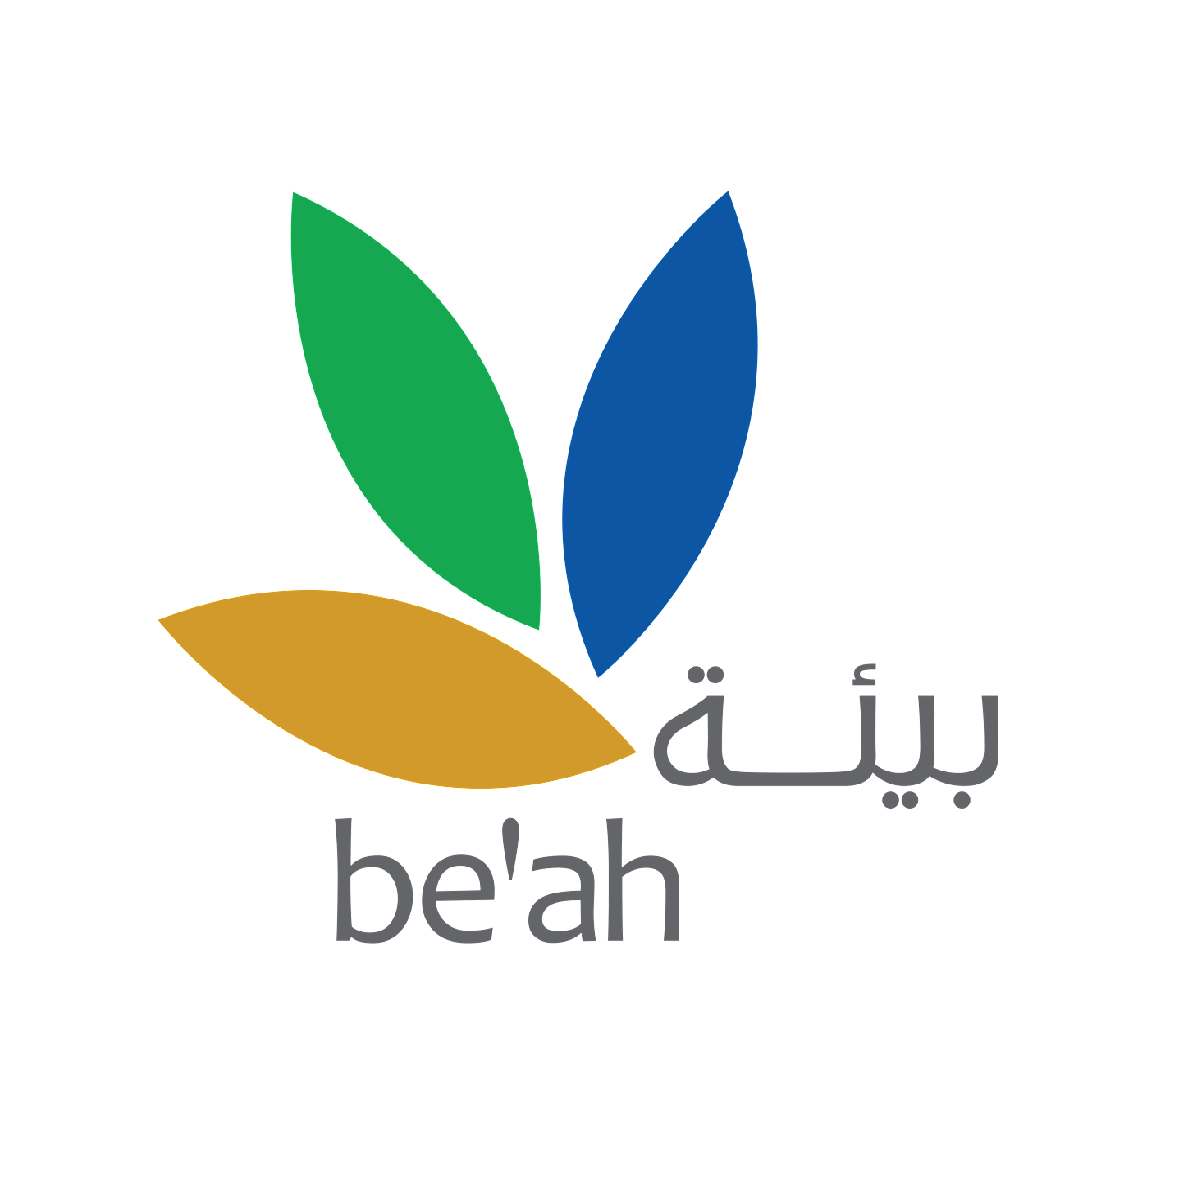 Oman Environmental Services Holding Company - be'ah